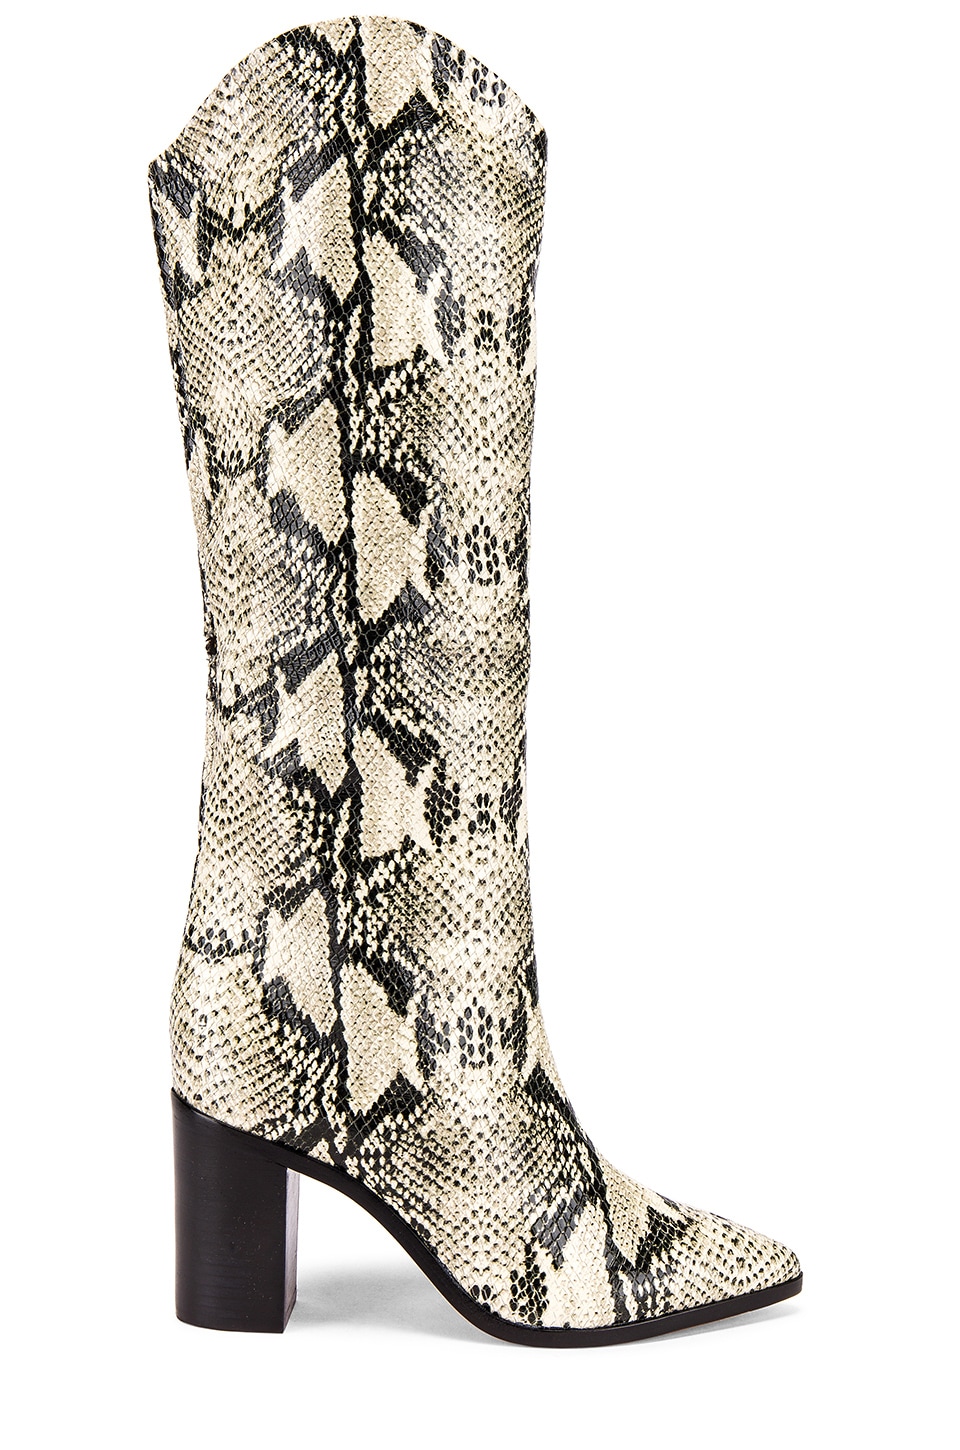 schutz snakeskin boots